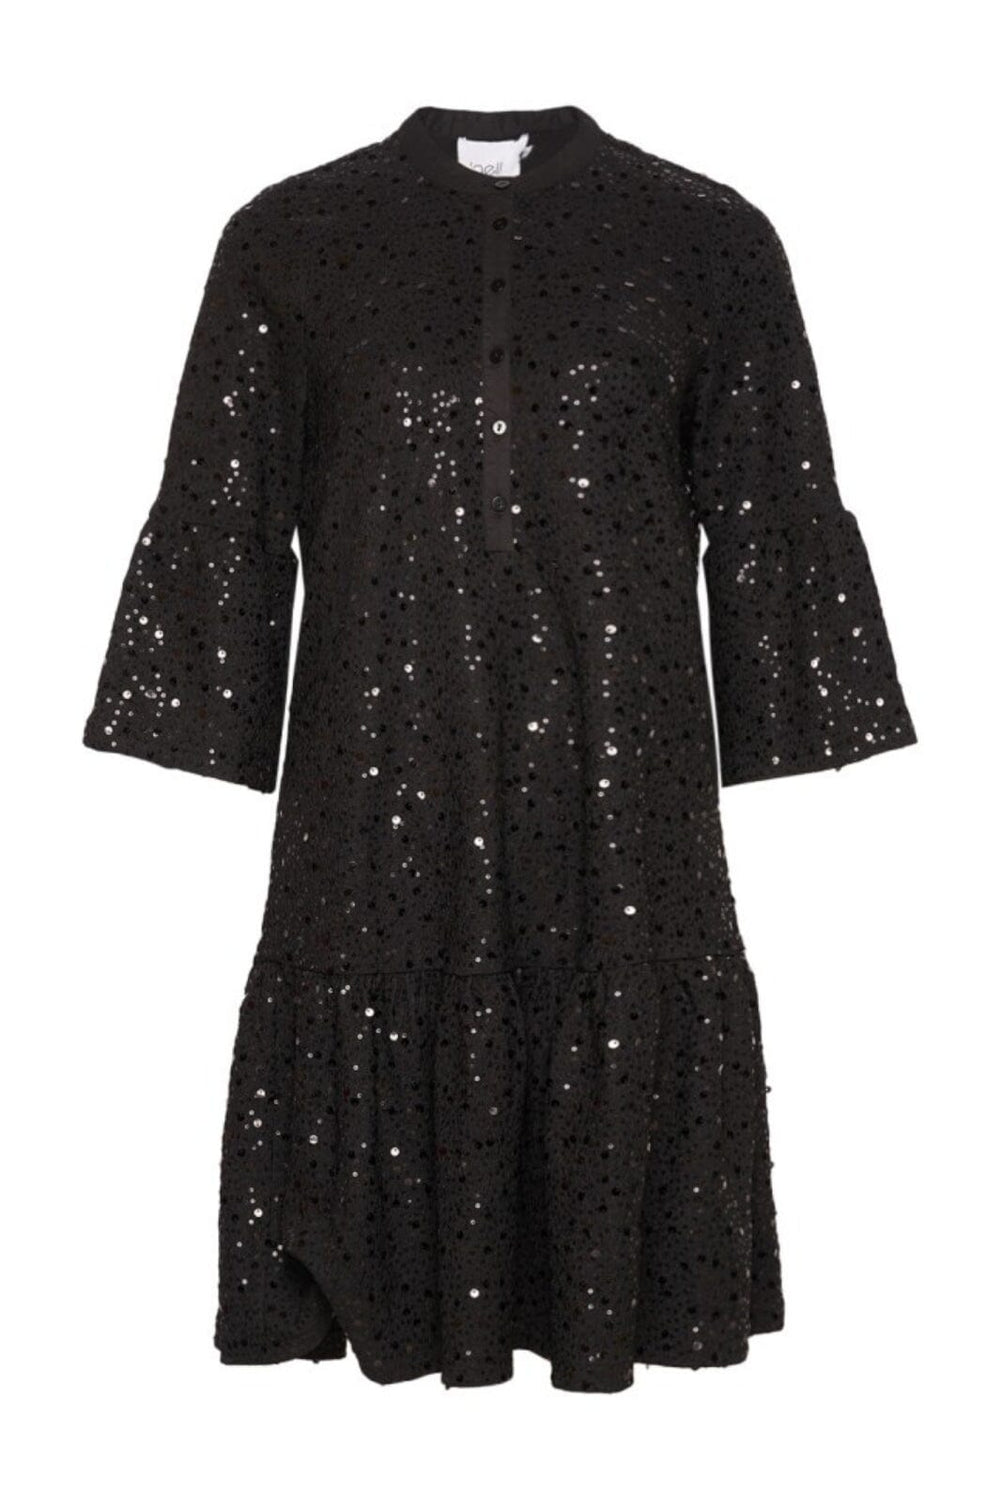 Noella - Verona Short Dress - 1149 Black W/ Black Kjoler 